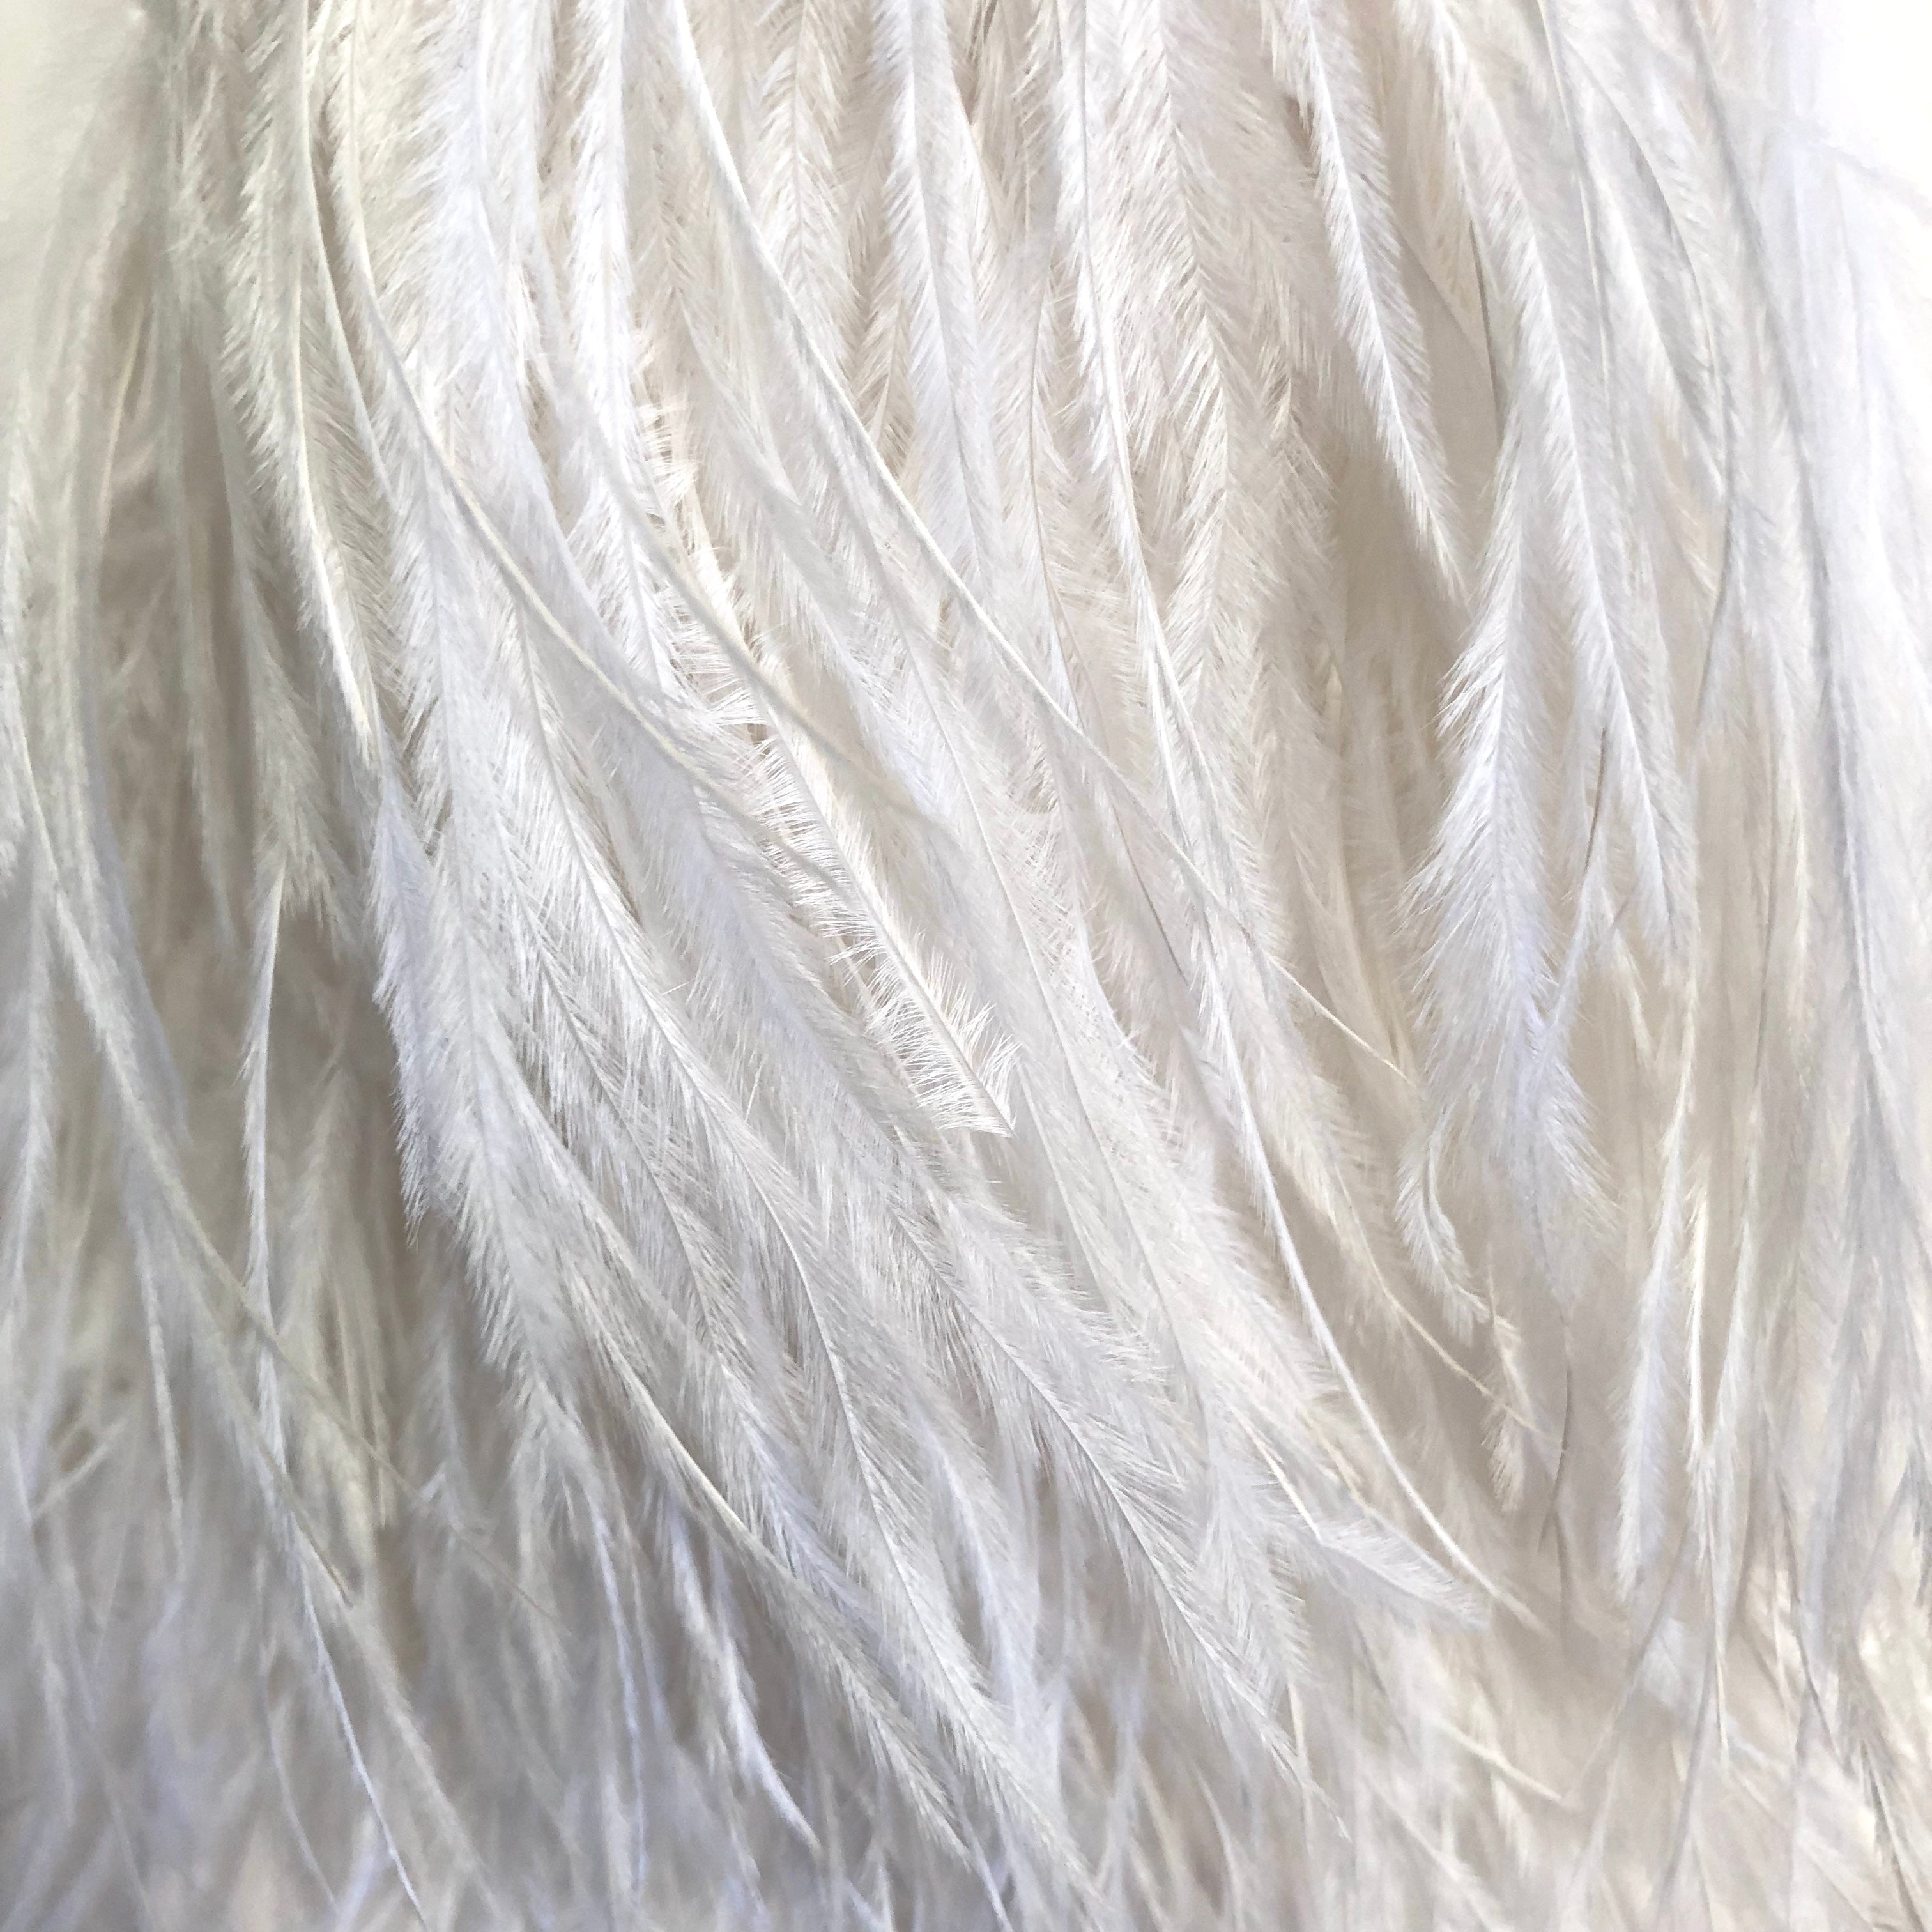 Ostrich Feathers Strung per 10cm - White